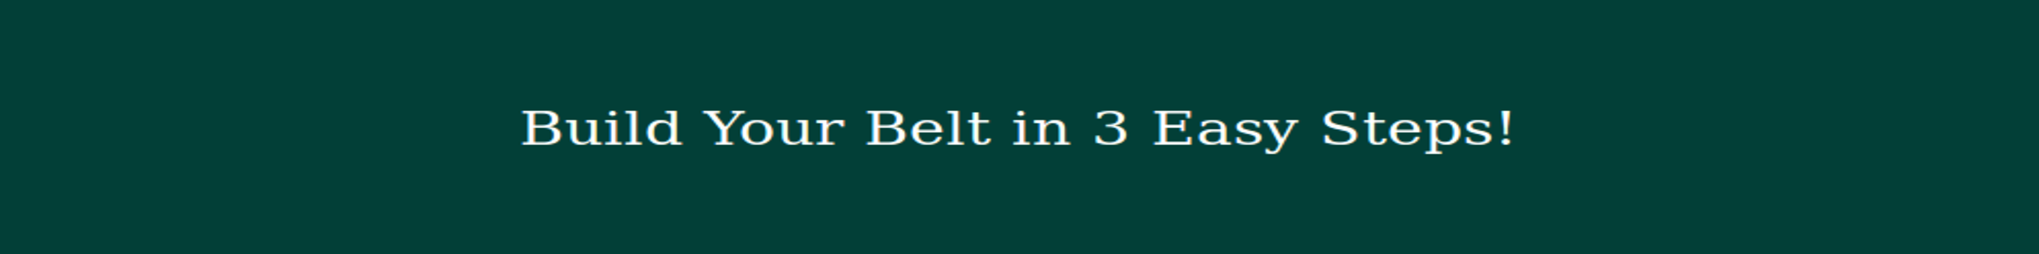 Build Your Own Belt